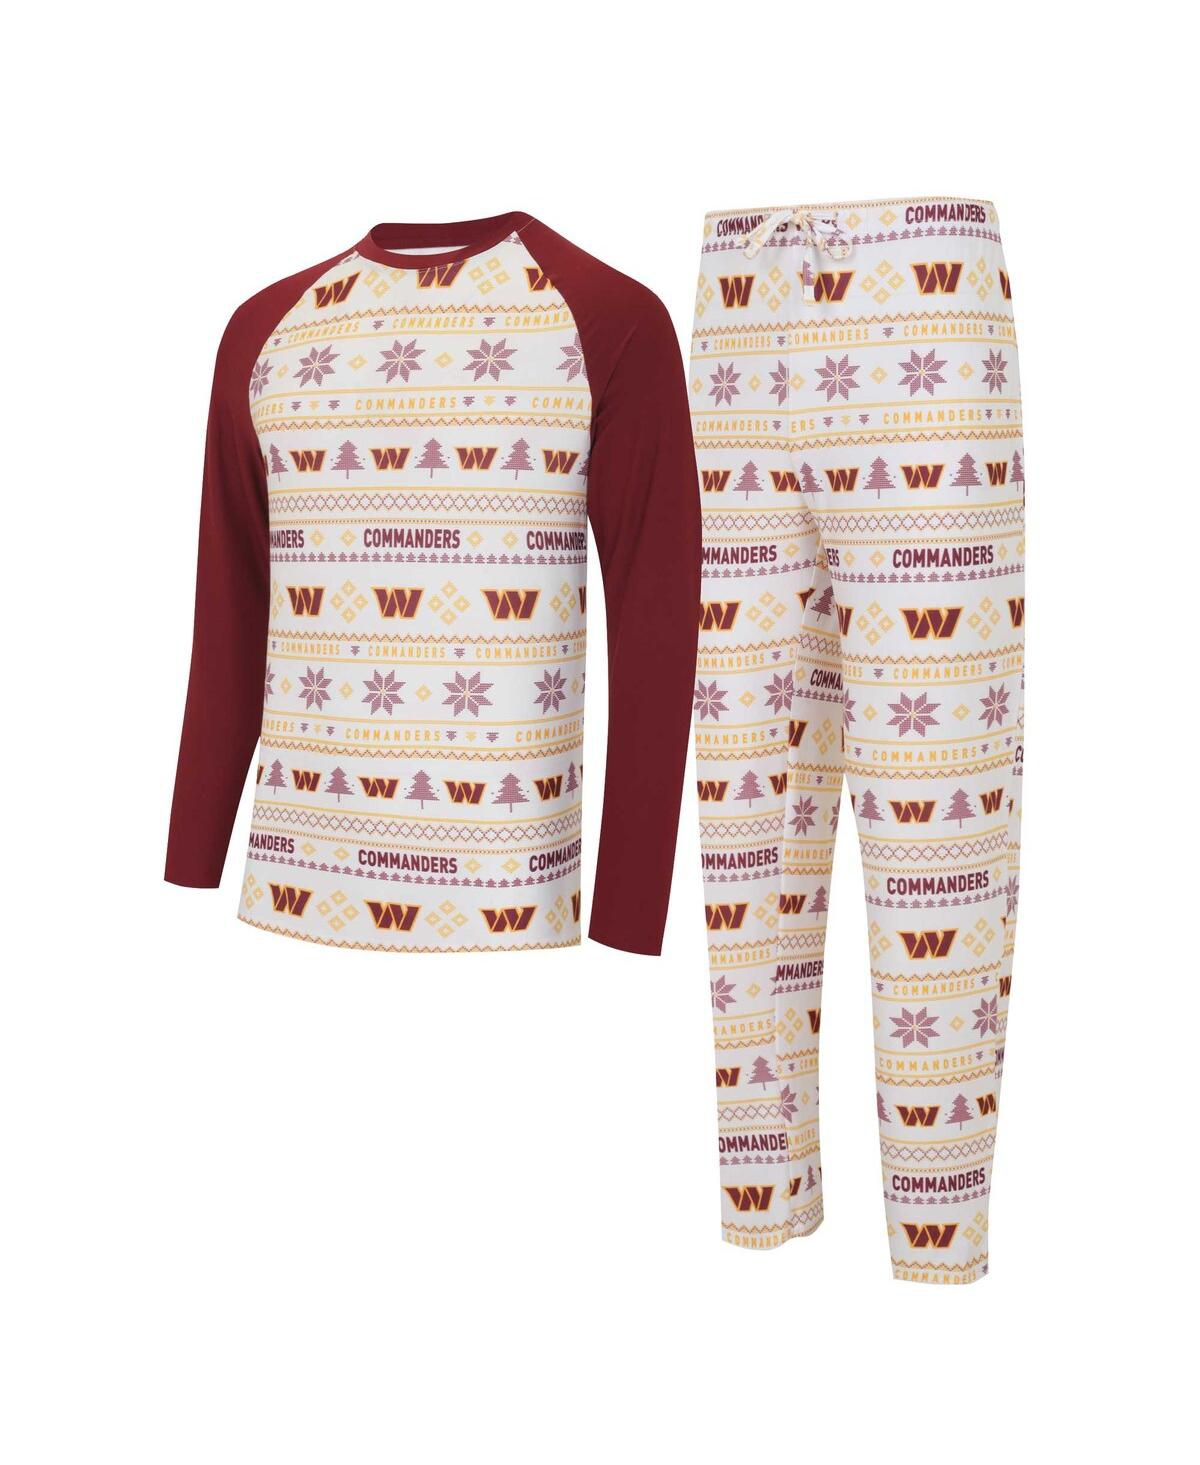 Villanova Wildcats Concepts Sport Women's Ultimate Flannel Sleep Shorts -  Navy/Gray